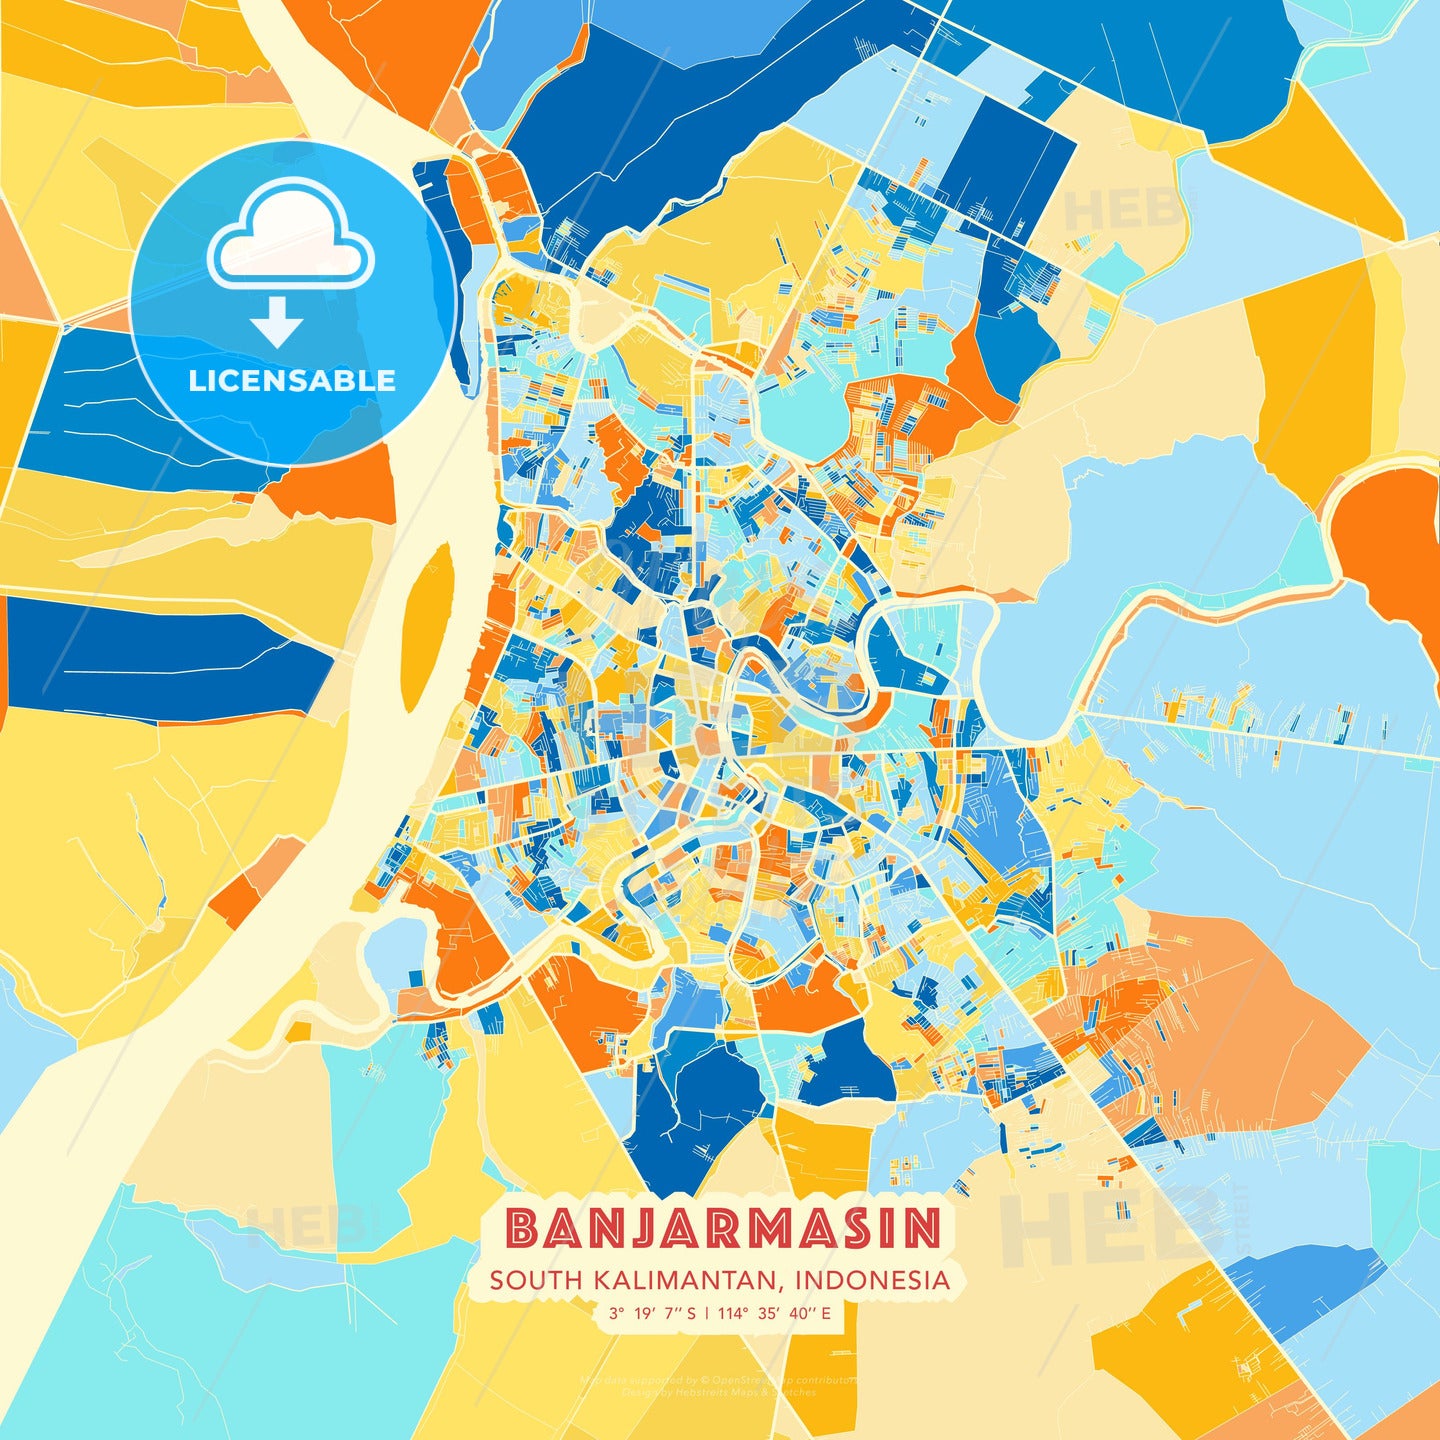 Banjarmasin, South Kalimantan, Indonesia, map - HEBSTREITS Sketches